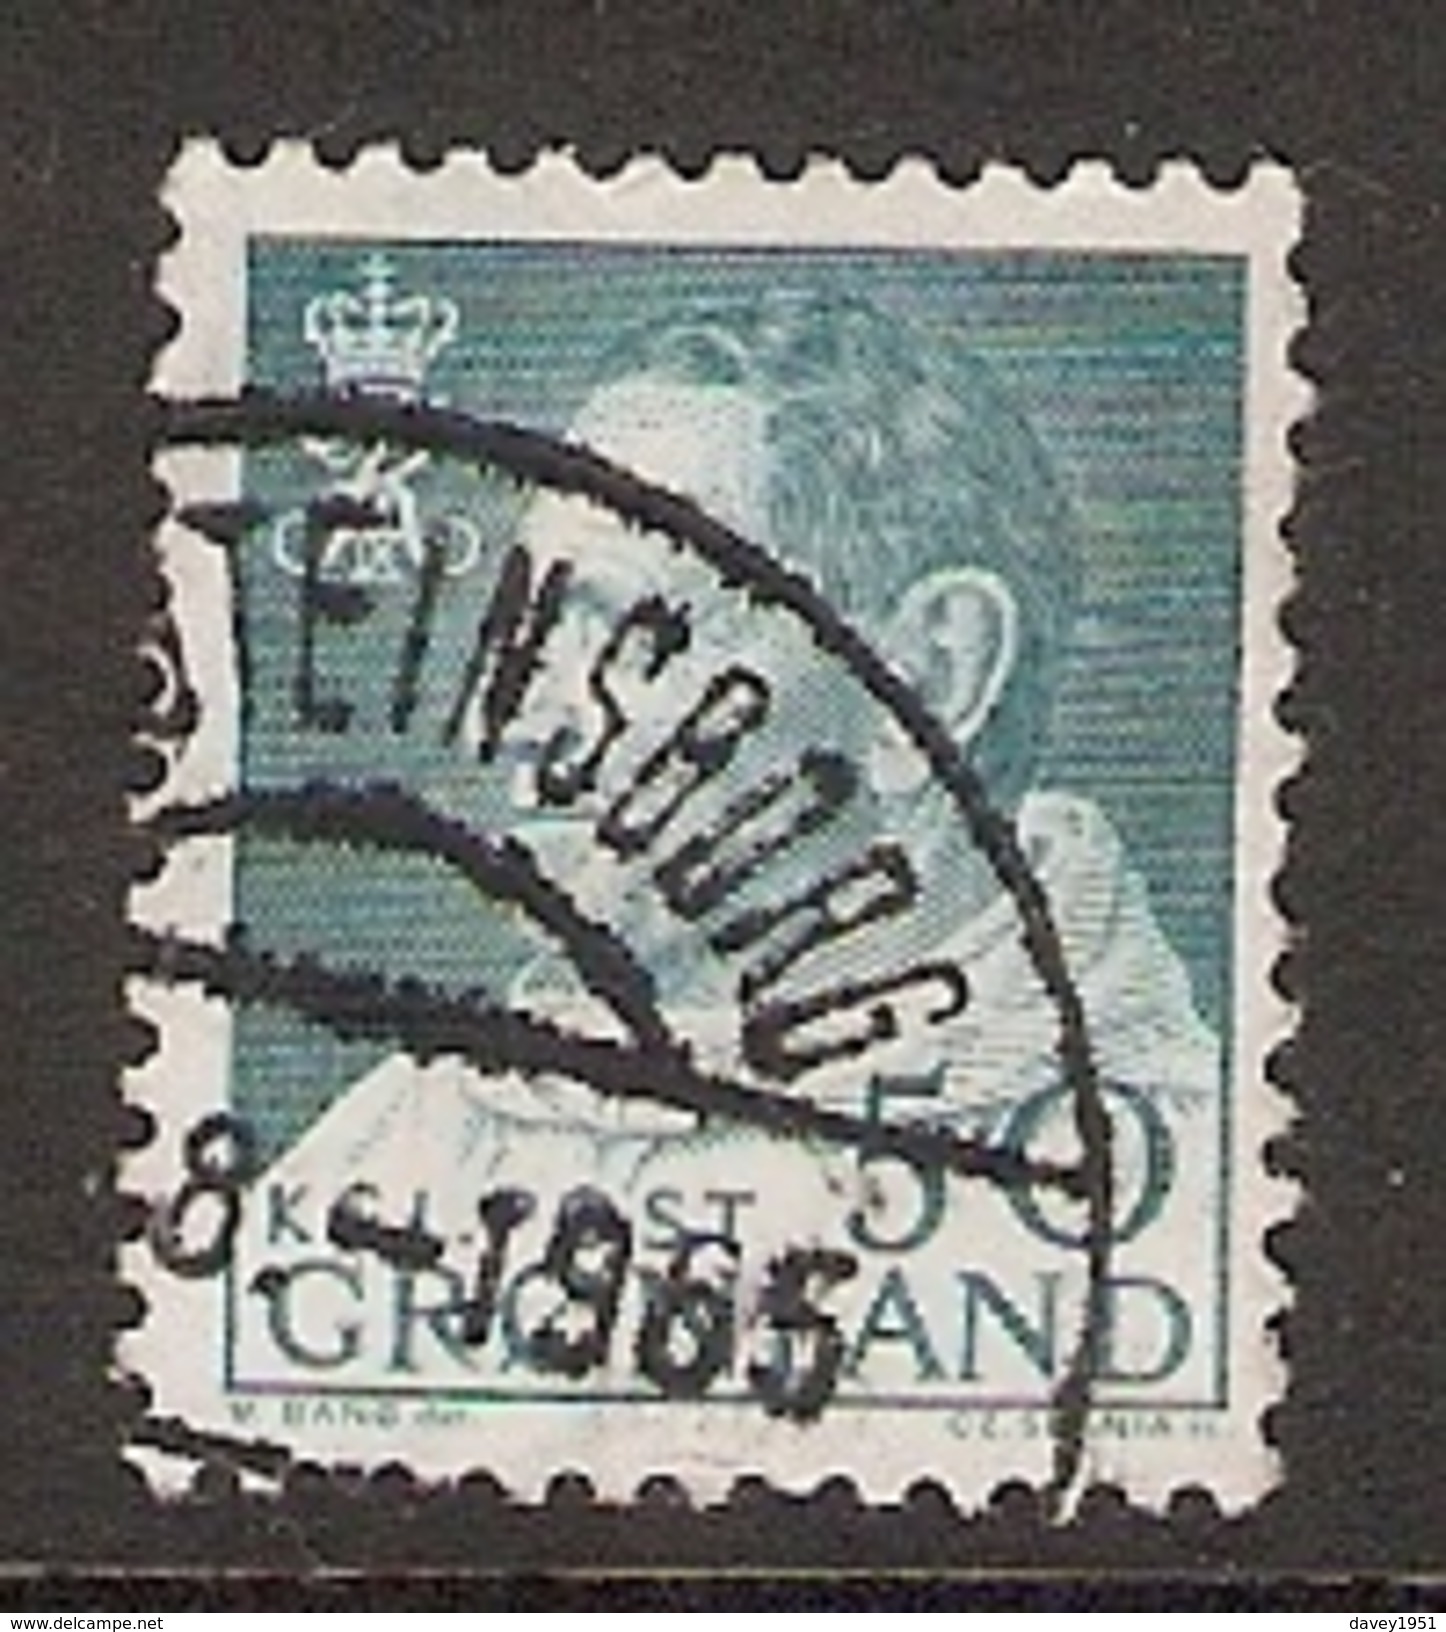 004016 Greenland 1964 50o FU - Used Stamps